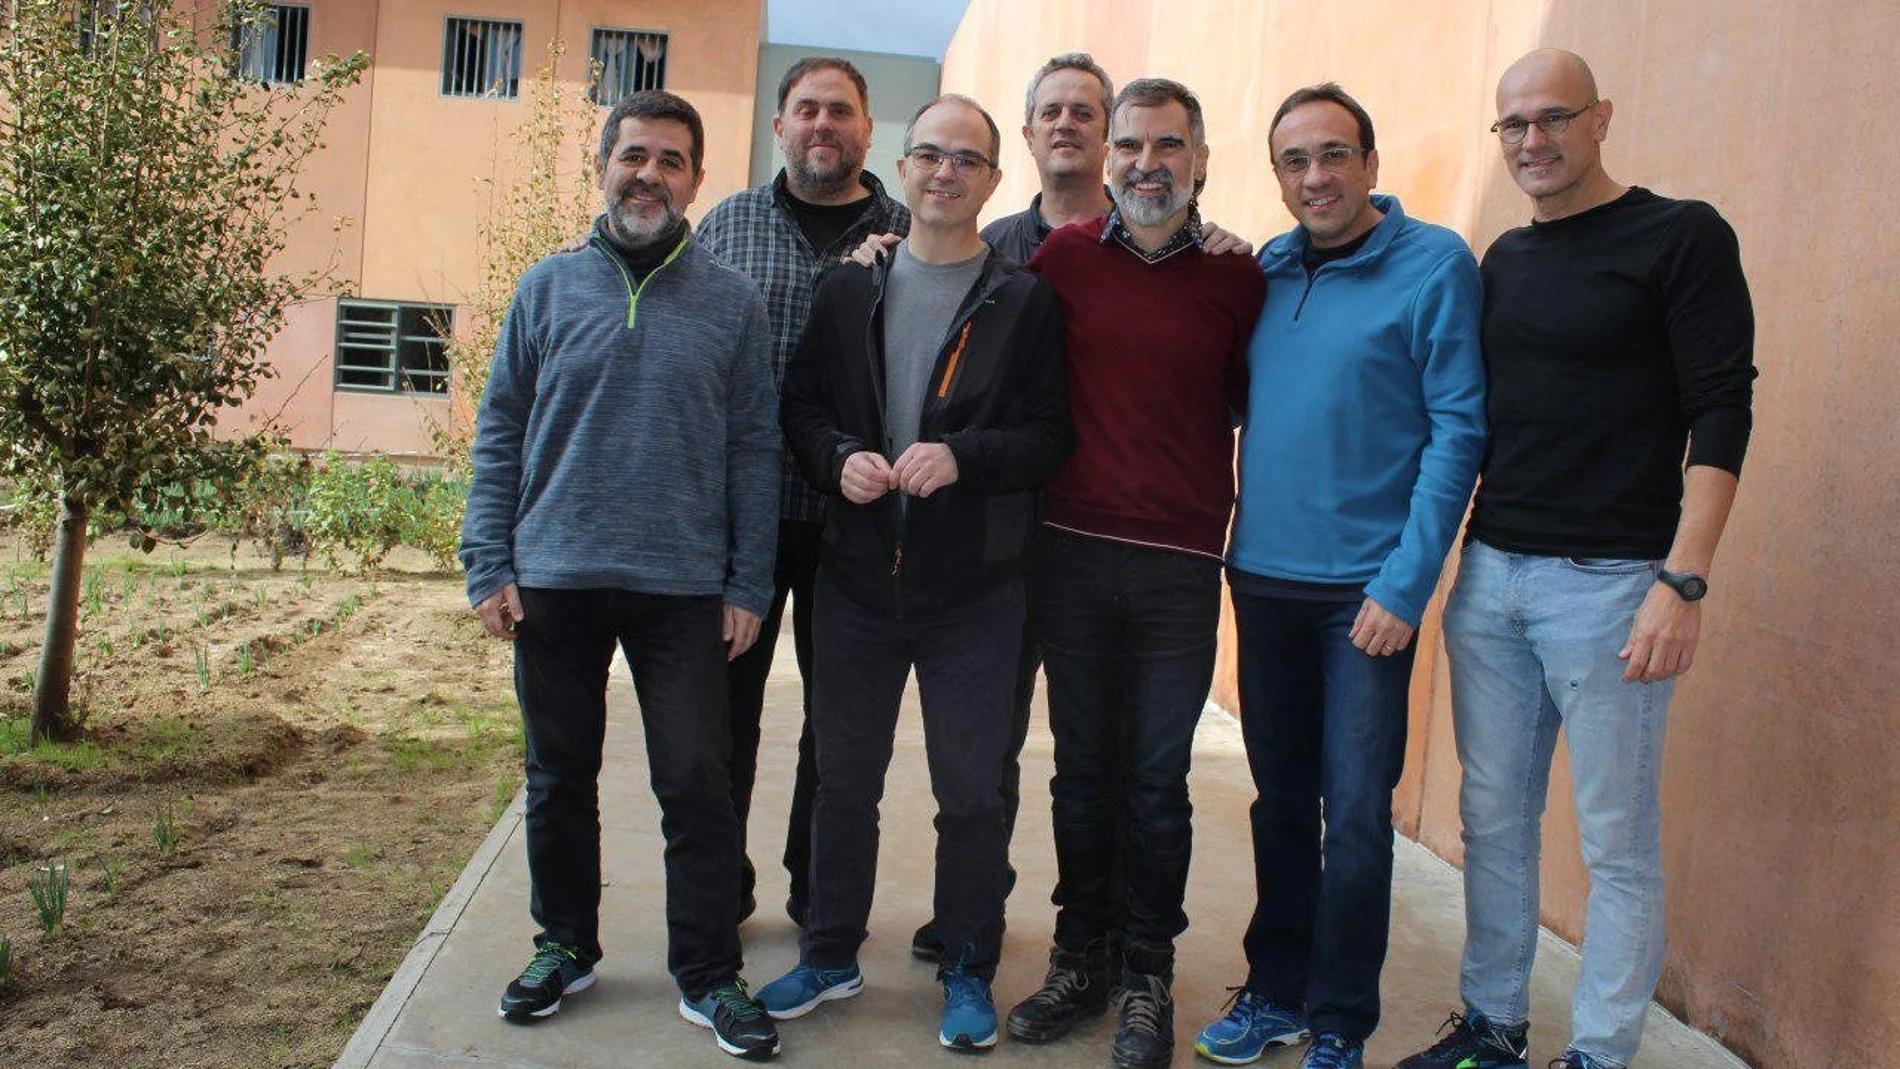 Imagen capturada de la cuenta oficial de Òmnium Cultural de Twitter de los siete dirigentes independentistas presos en la cárcel de Lledoners (Barcelona). EFE